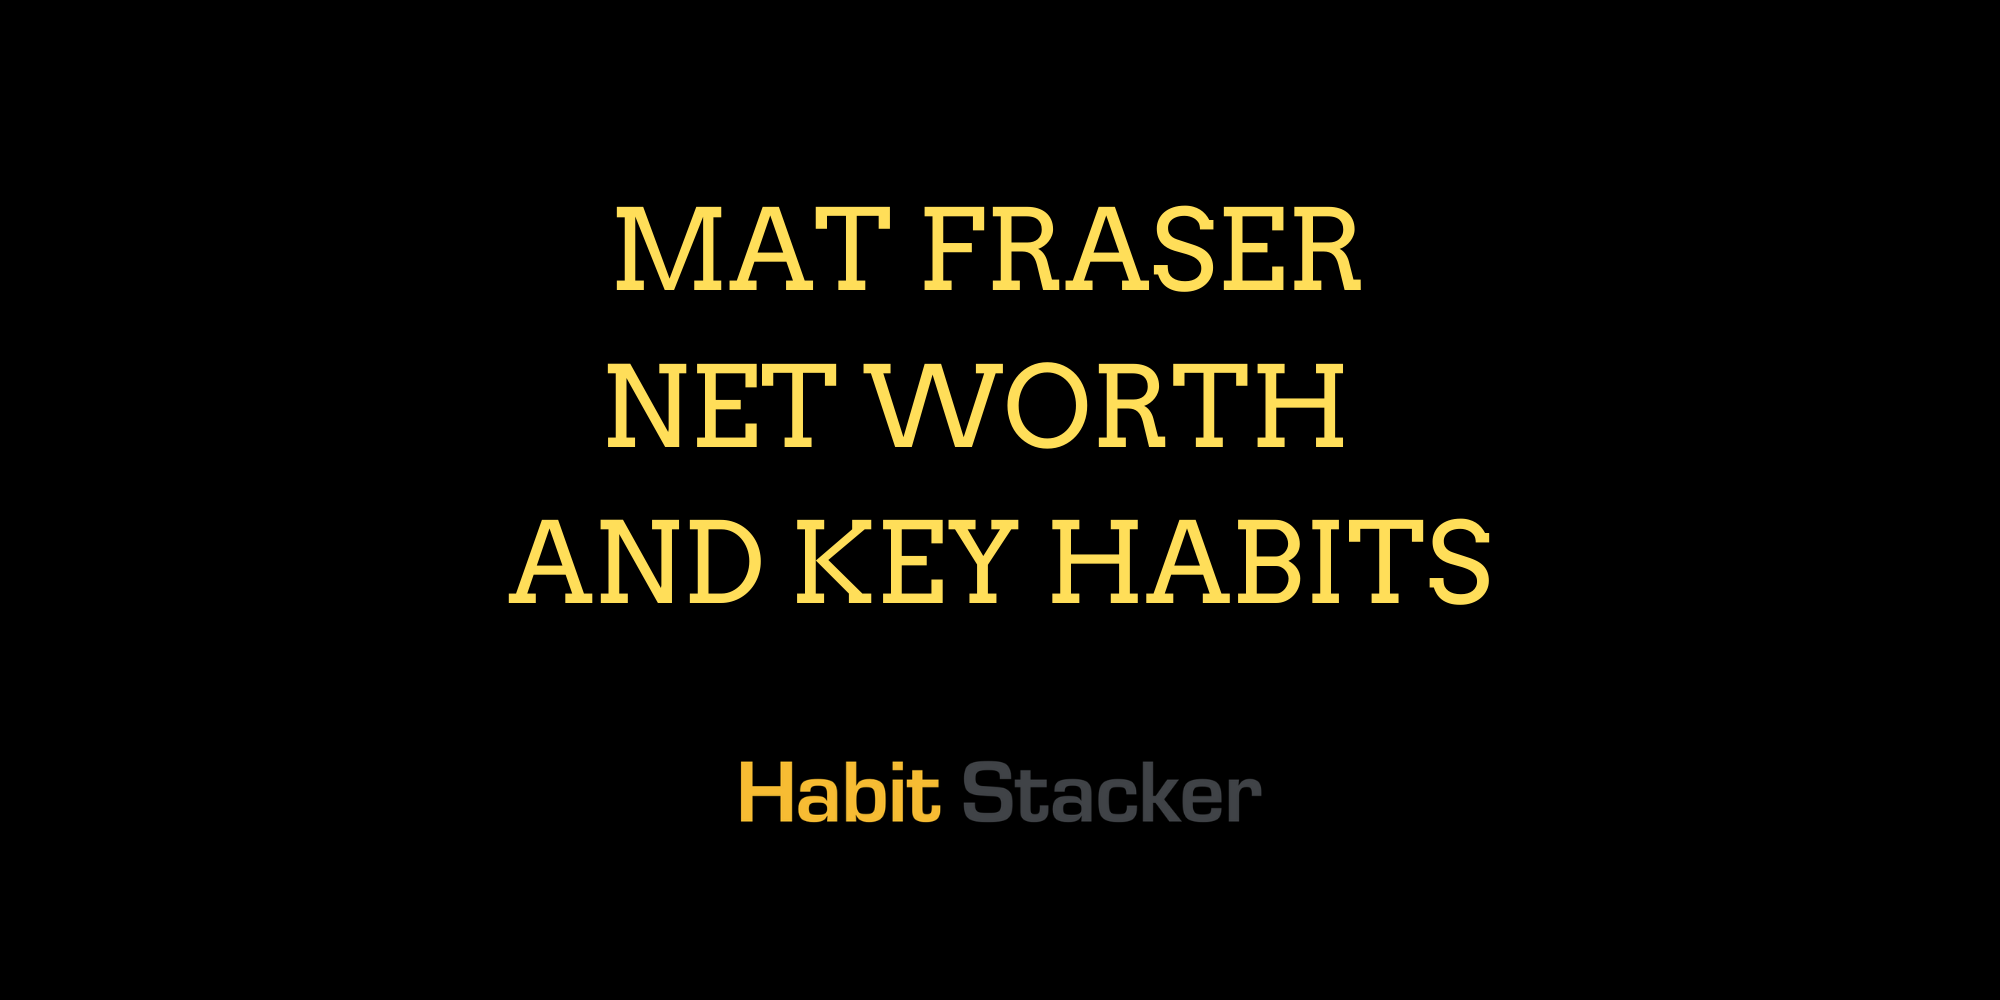 Mat Fraser Net Worth and Key Habits